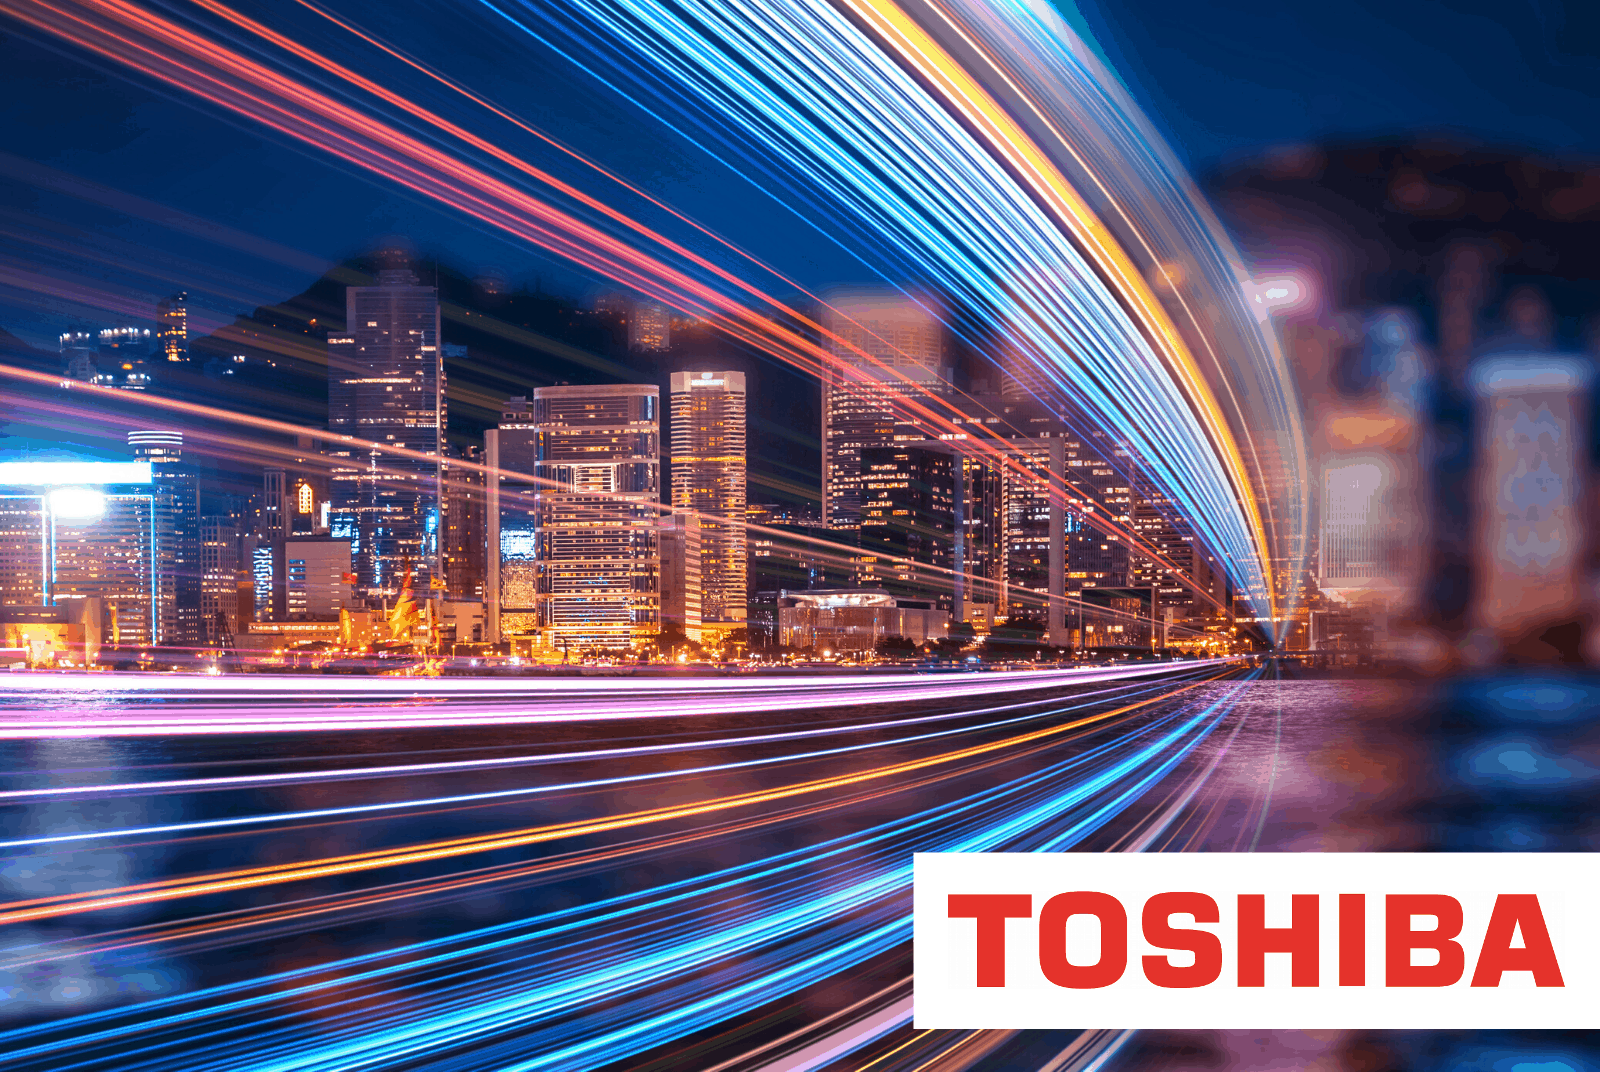 Toshiba Case Study